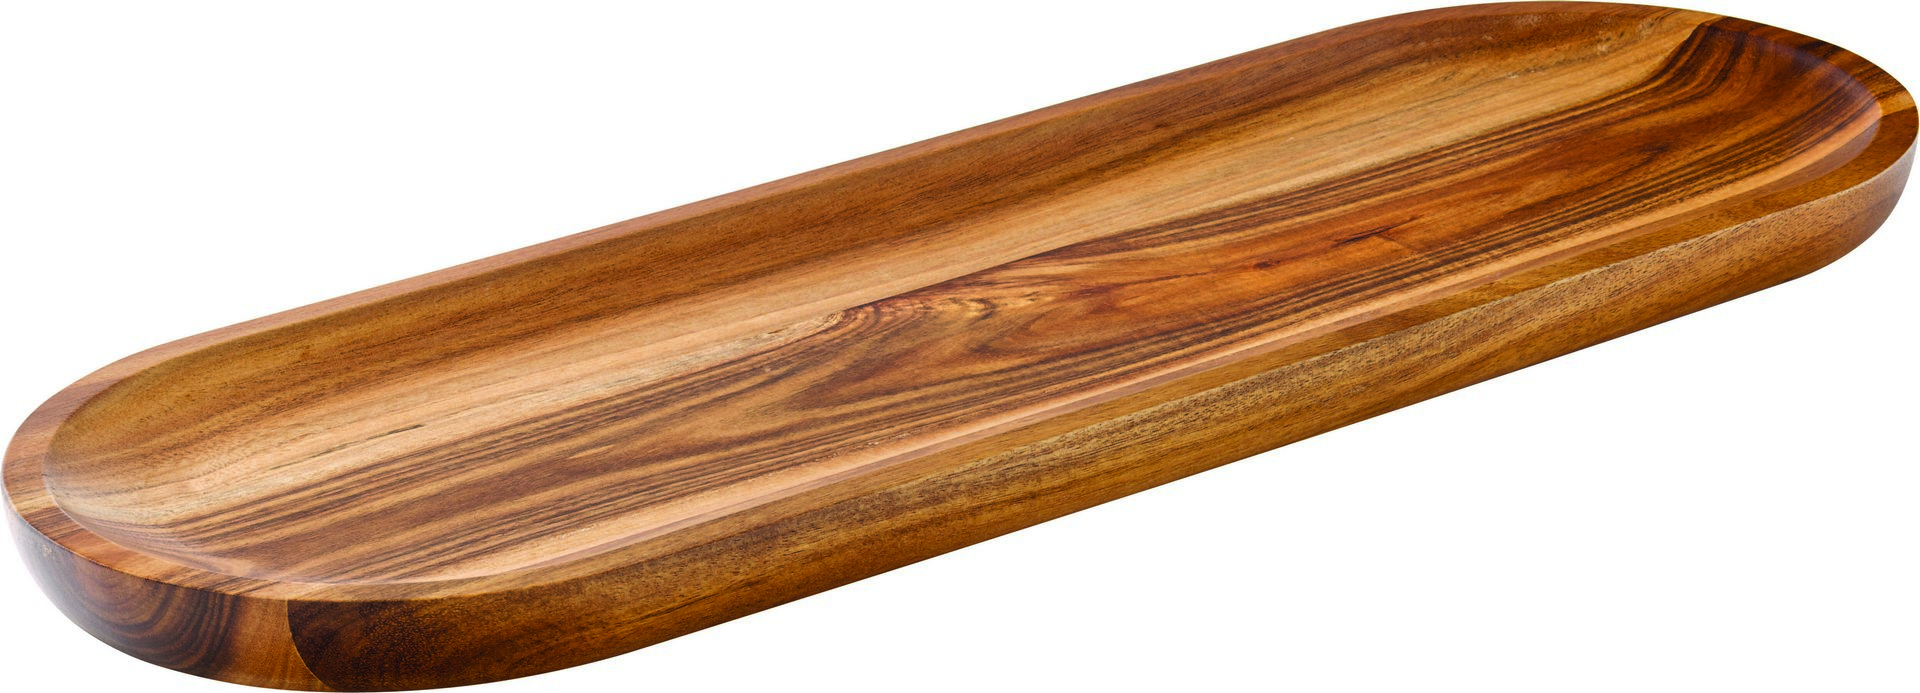 Acacia Wood Serving Board 17 x 5.5